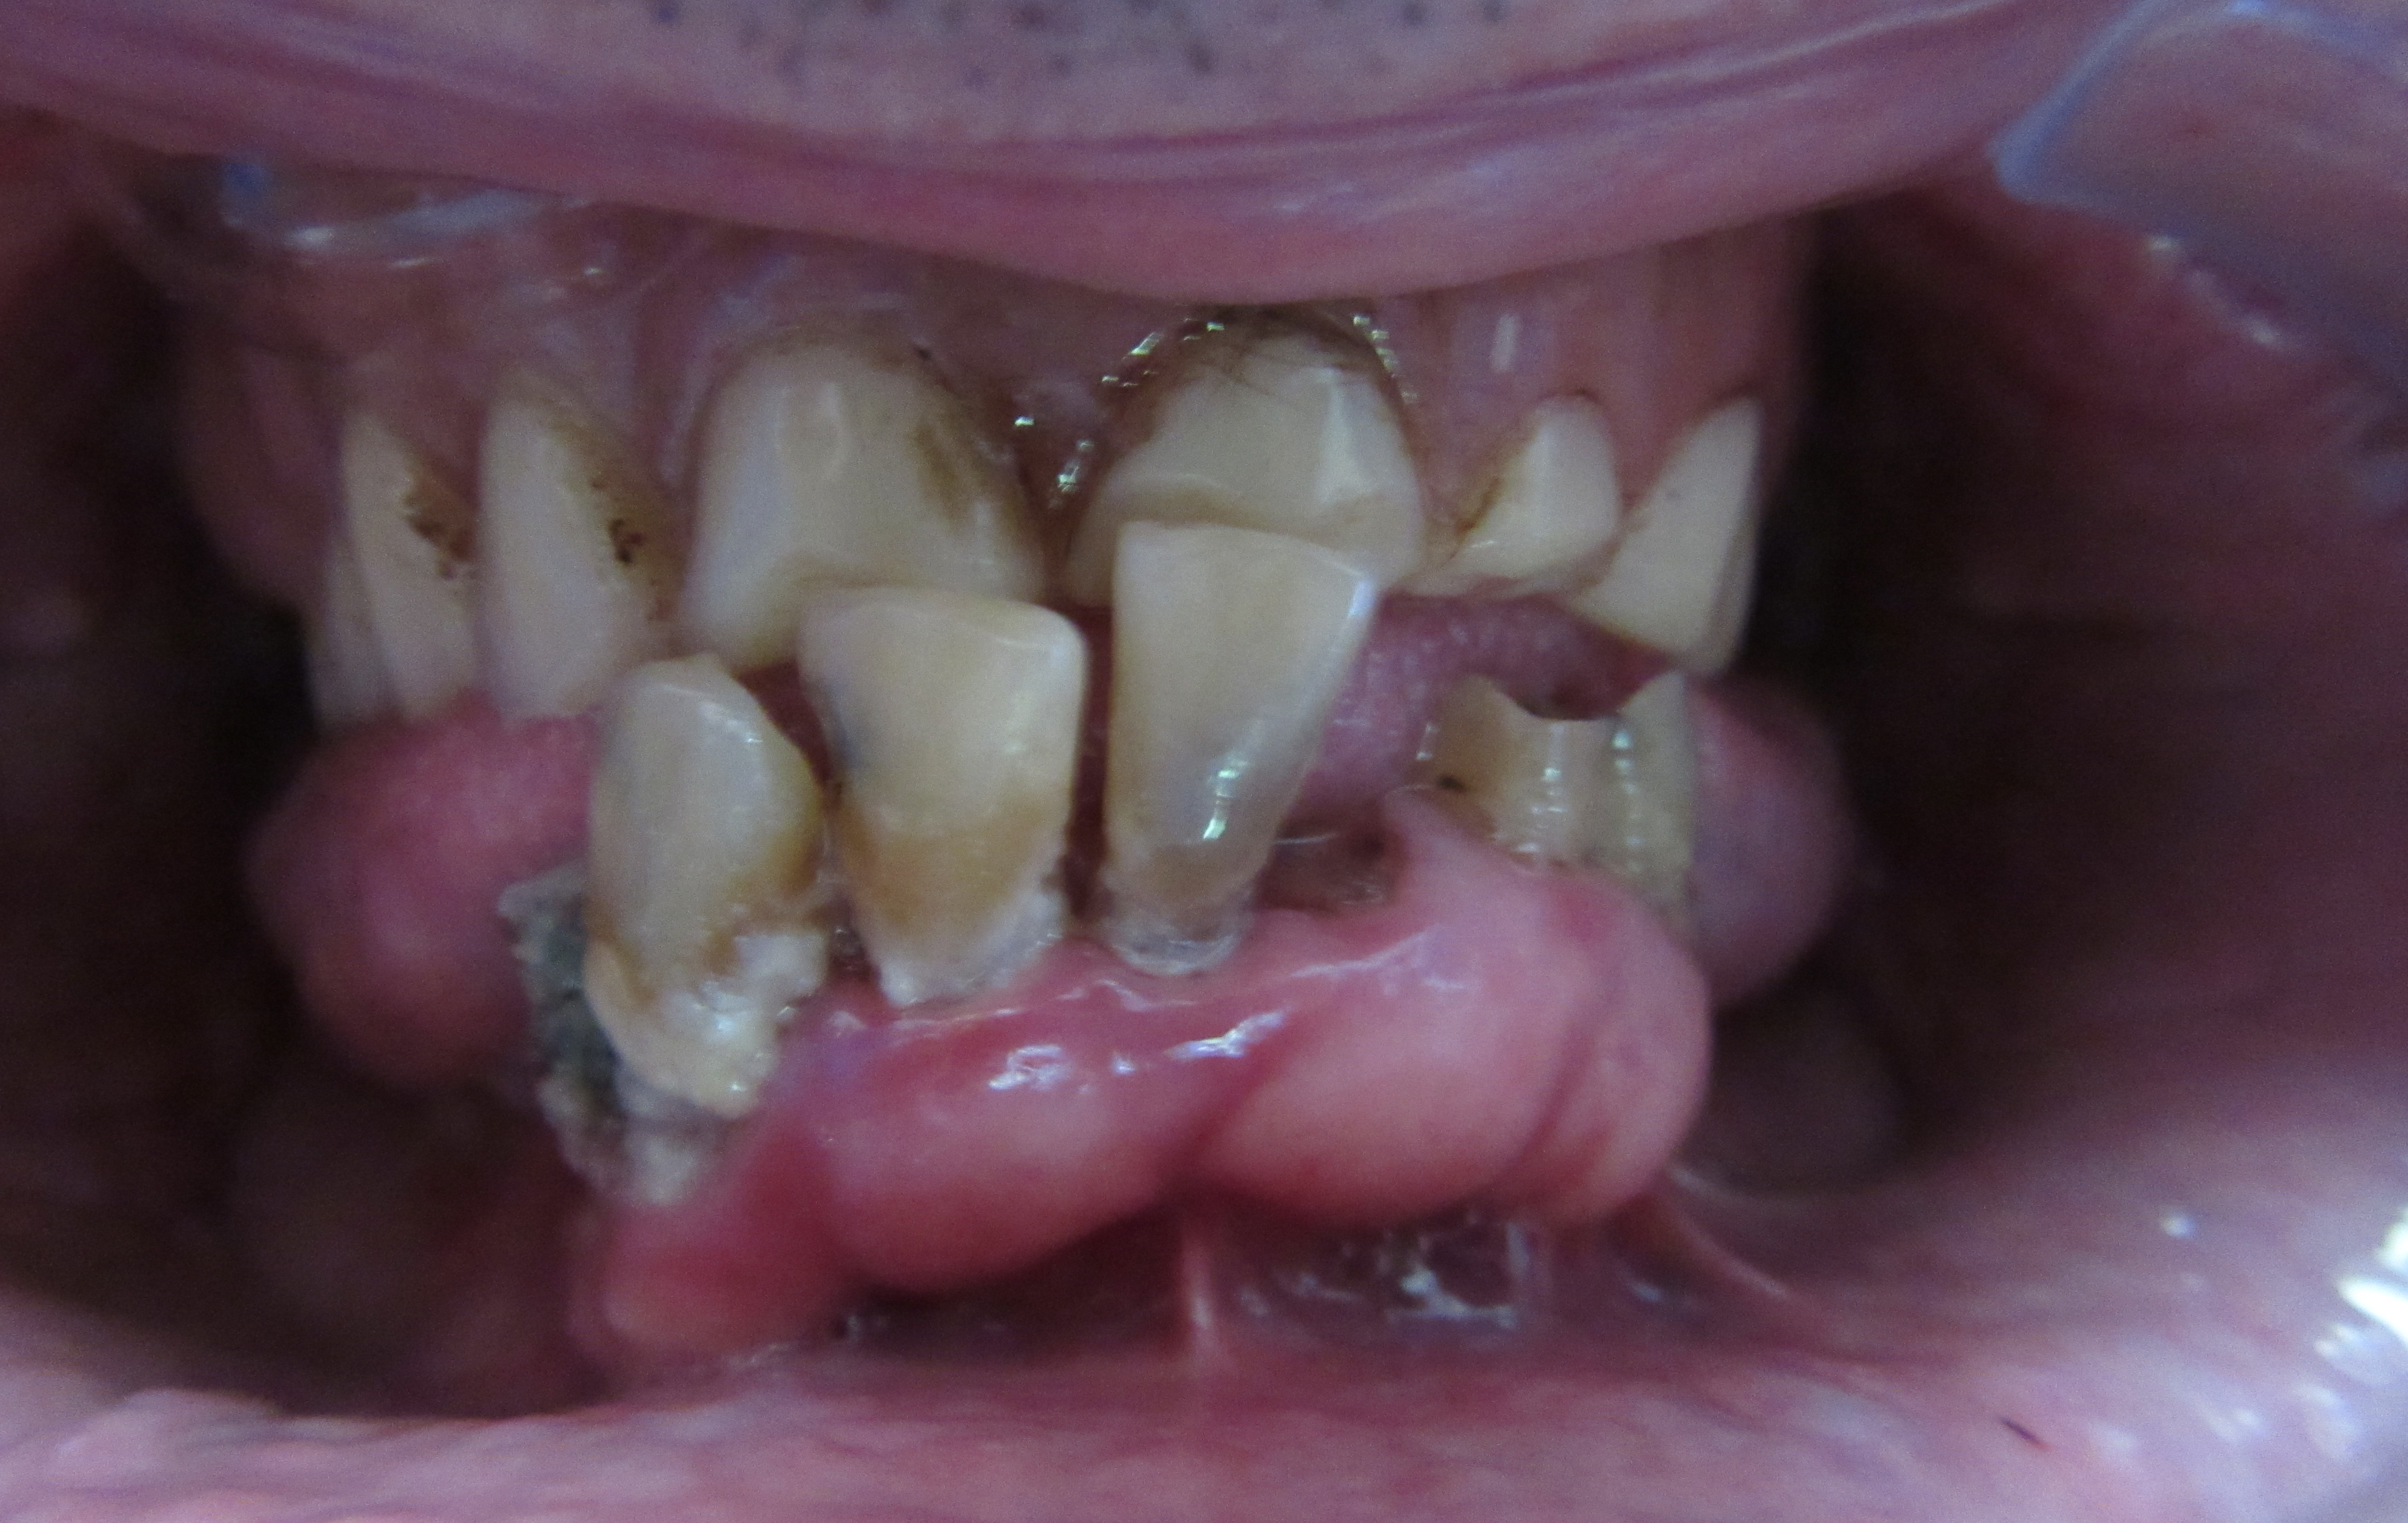 close-up of patient's teeth prior to DIEM 2